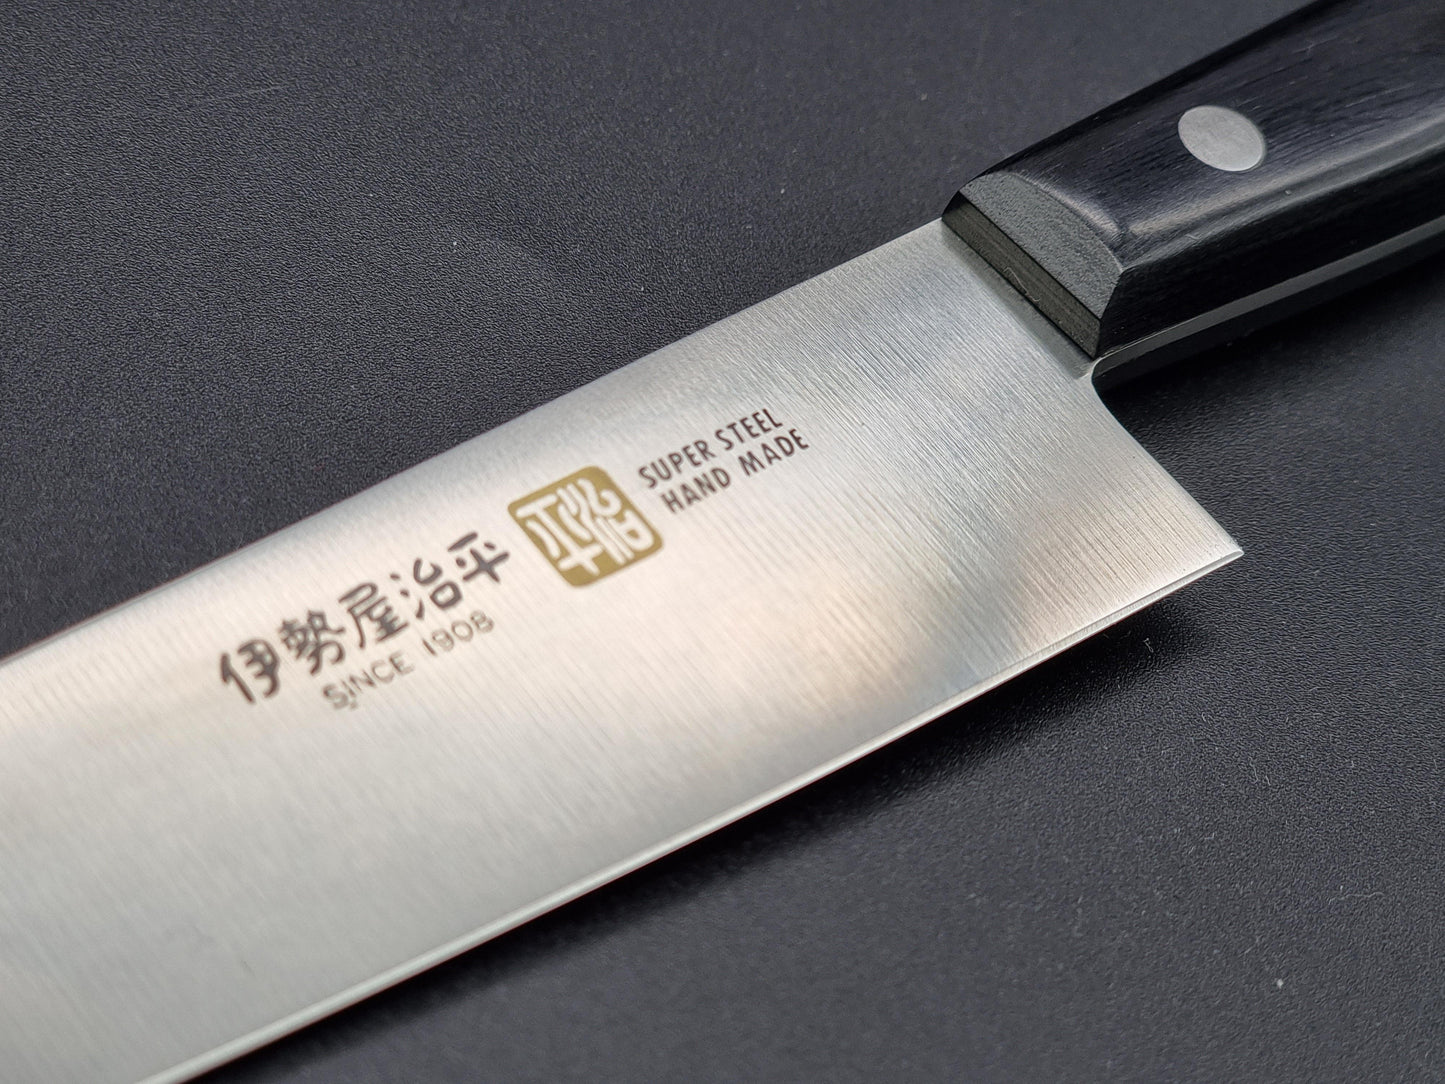 Iseya Molybdenum Steel 150mm Petty Utility Knife with Black Handle - The Sharp Chef